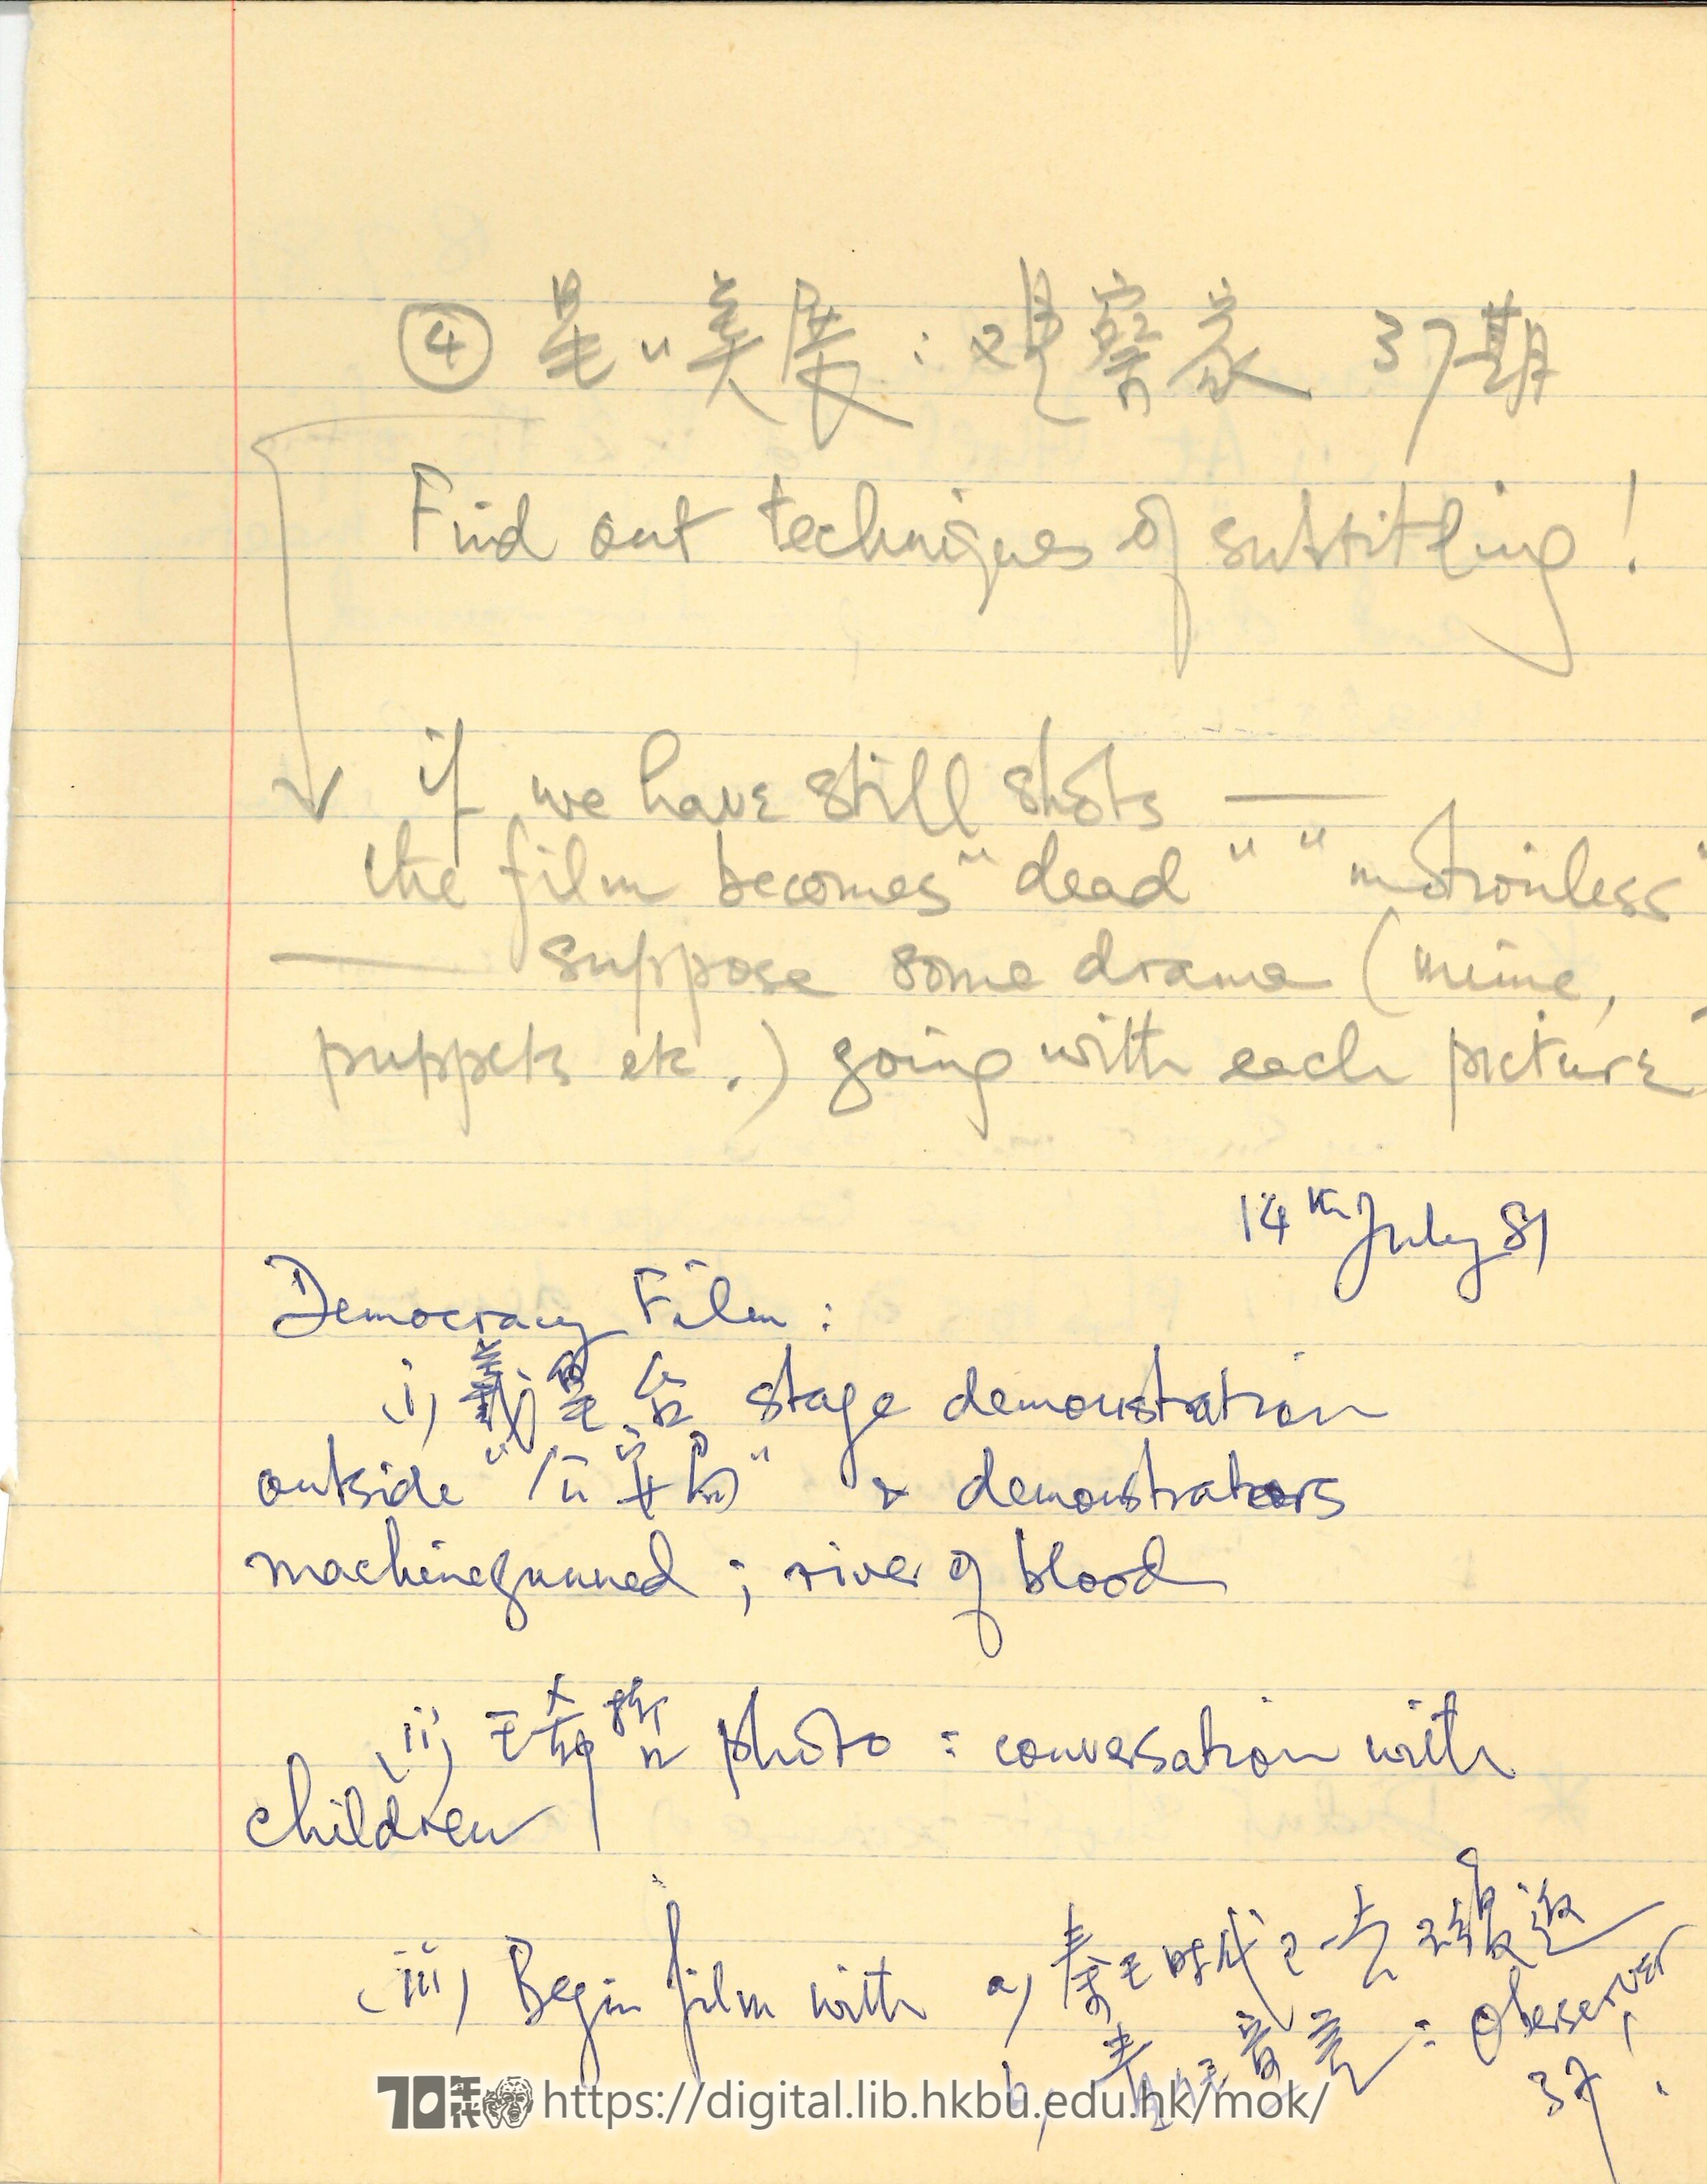   Personal notes and diary (1981-1984) MOK, Chiu Yu 